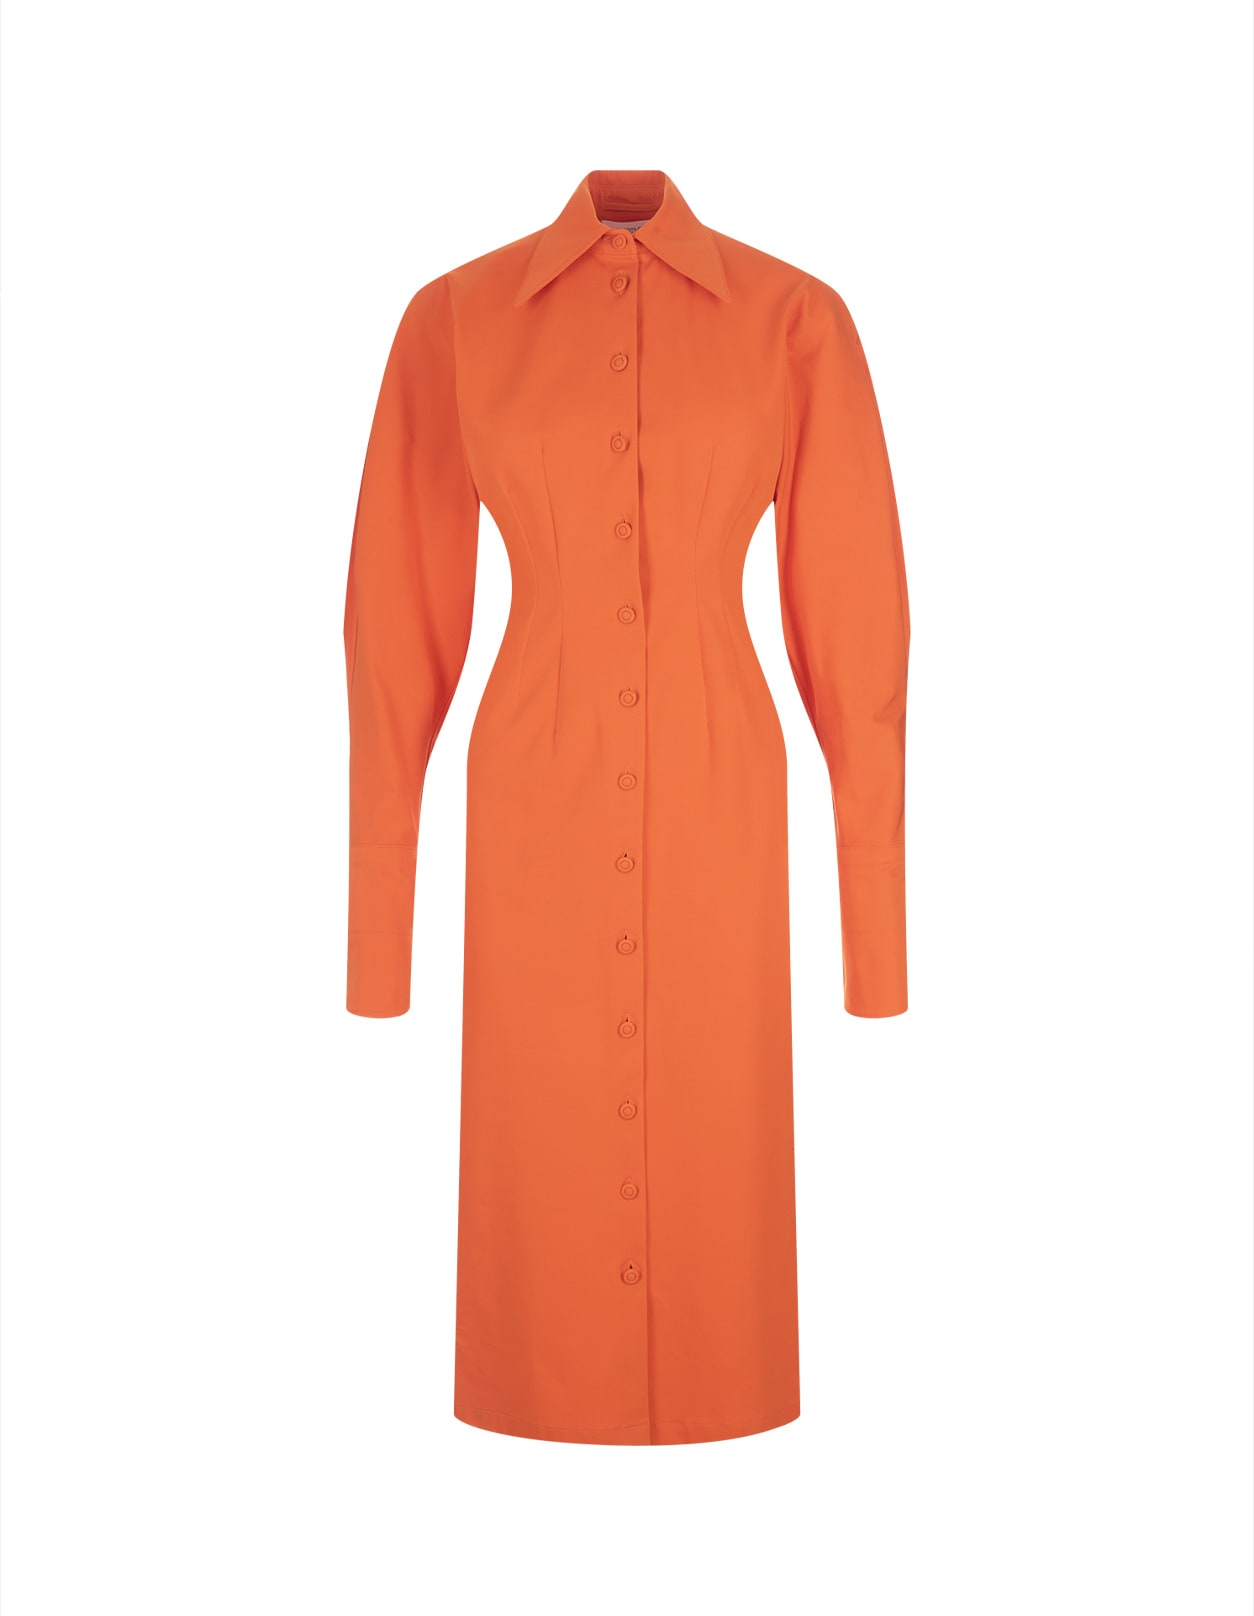 sportmax orange enigma shirt dress